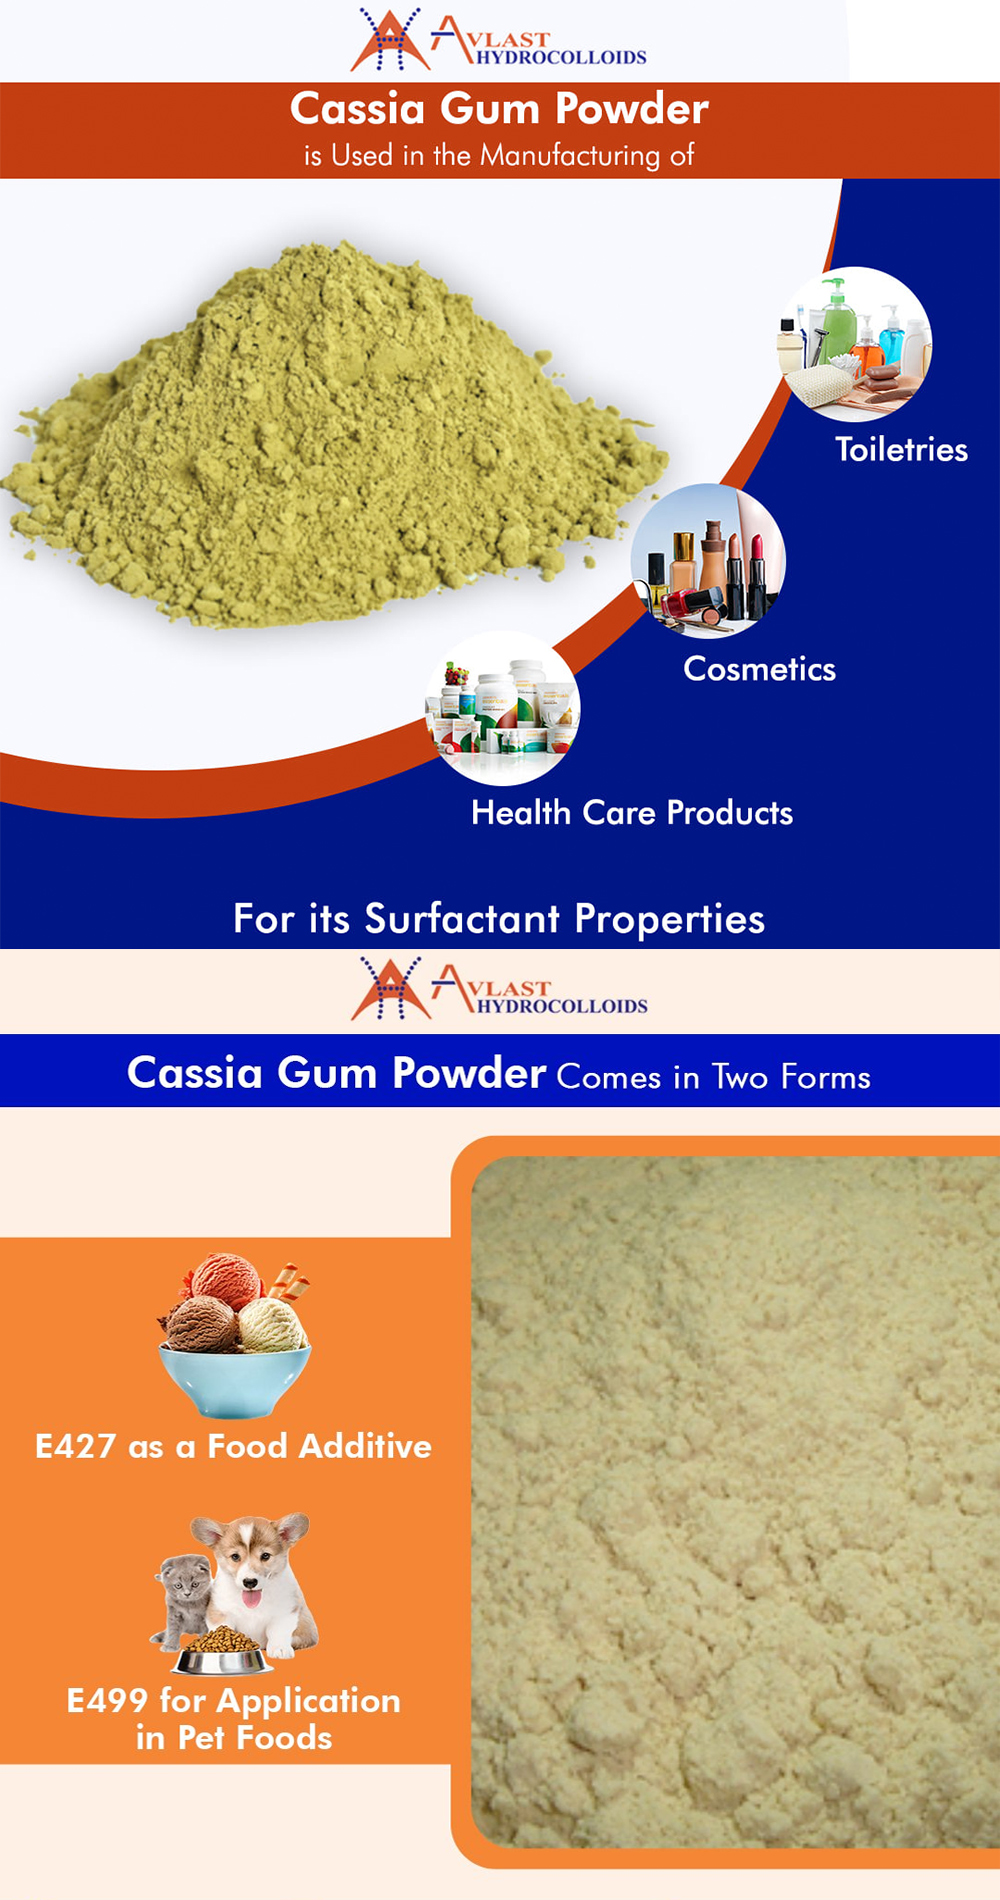 Cassia Gum Powder Applications Benefits